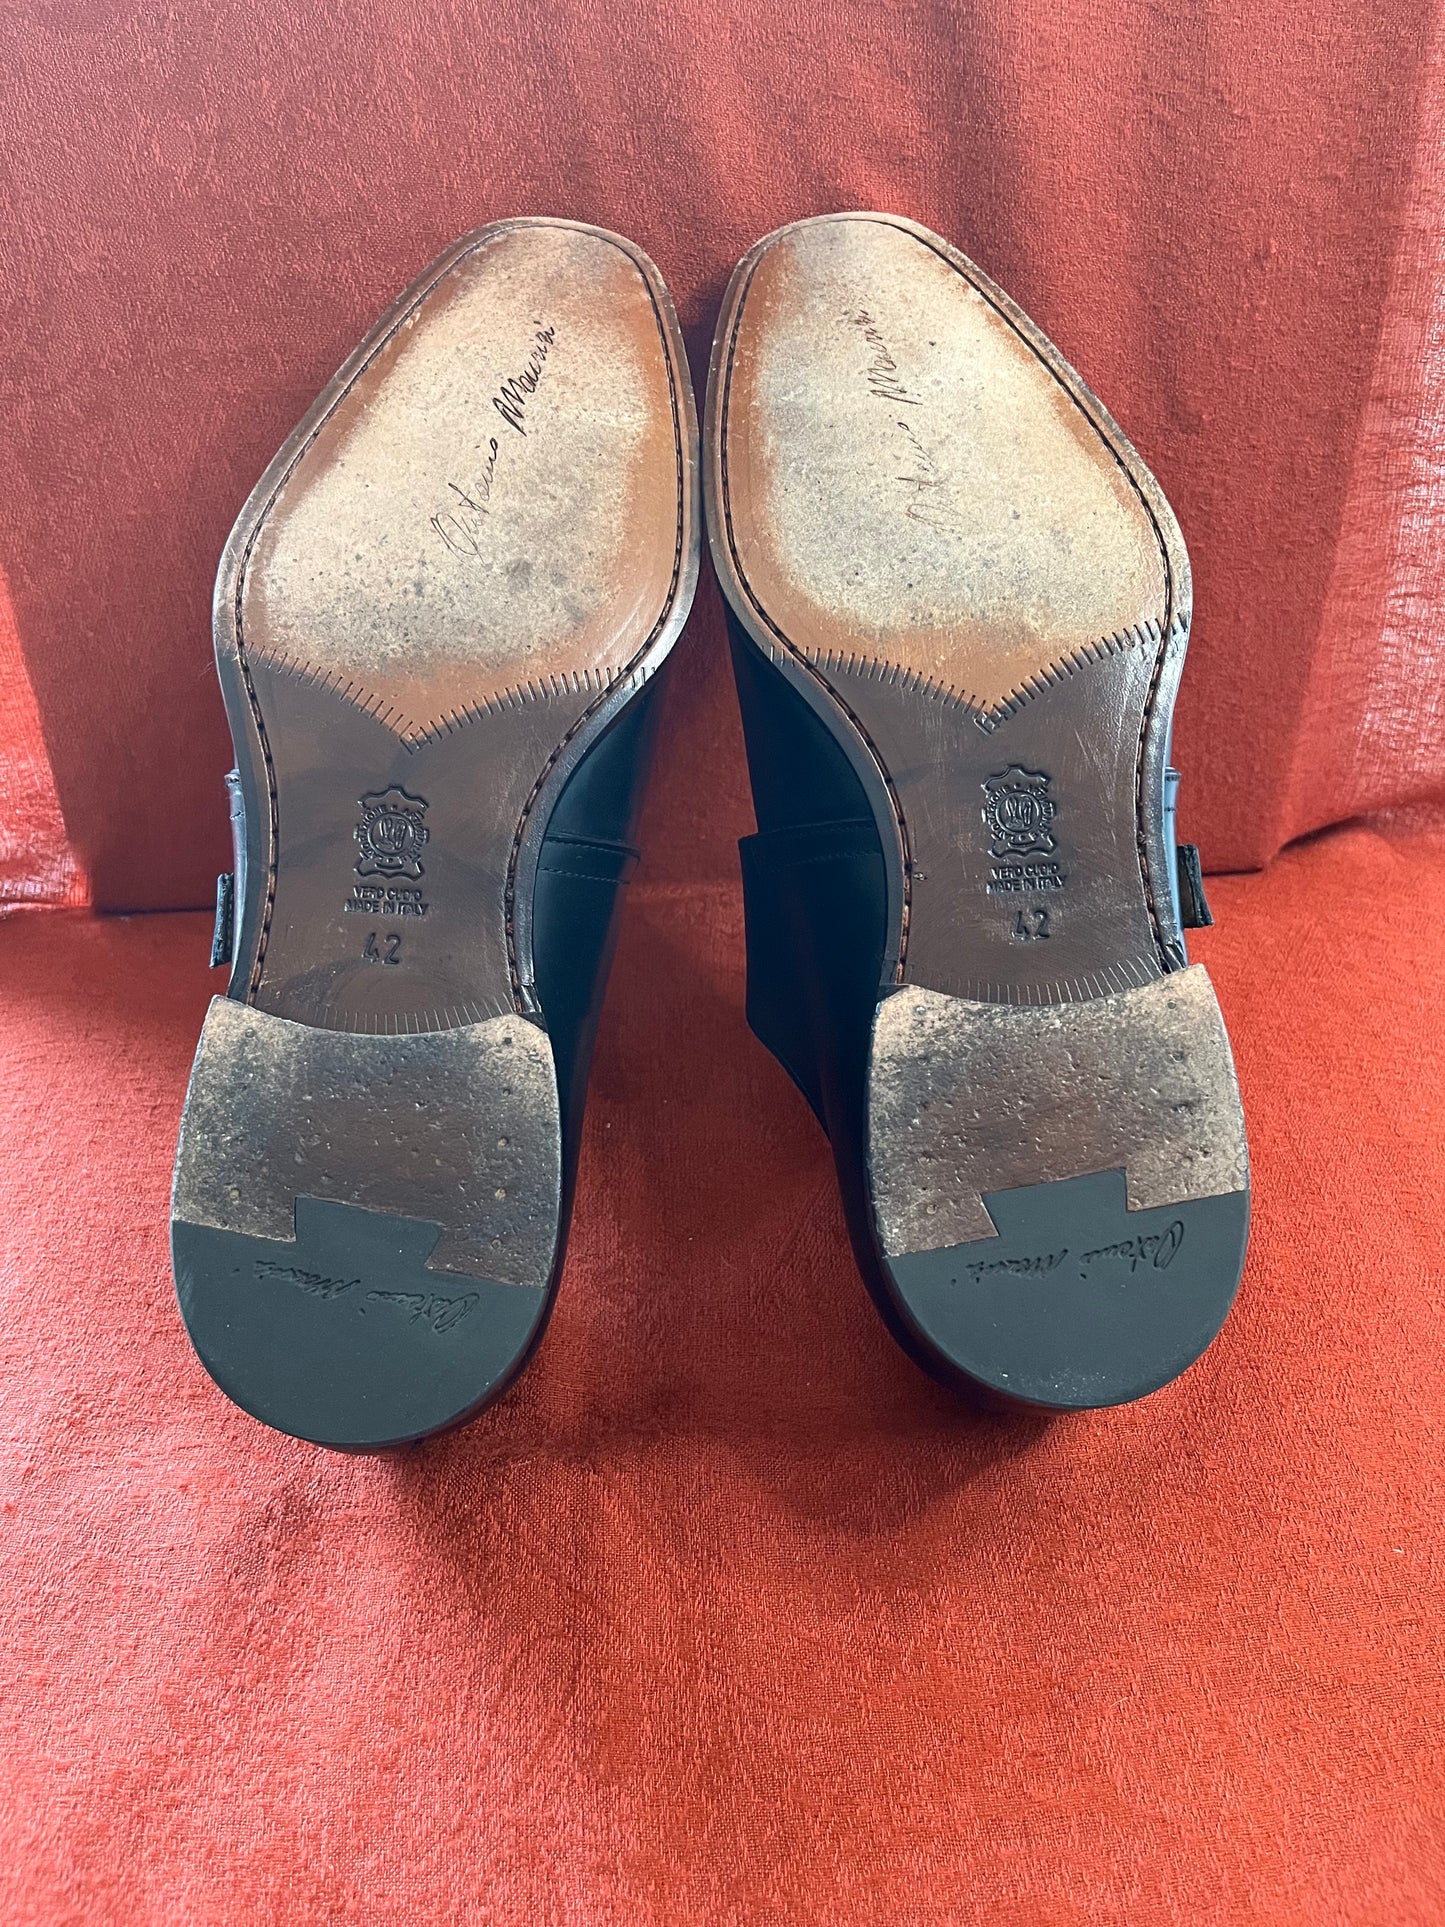 Antonio Maurizi Italian Leather Side Buckle Men's Shoe-Size 42 (US 9)